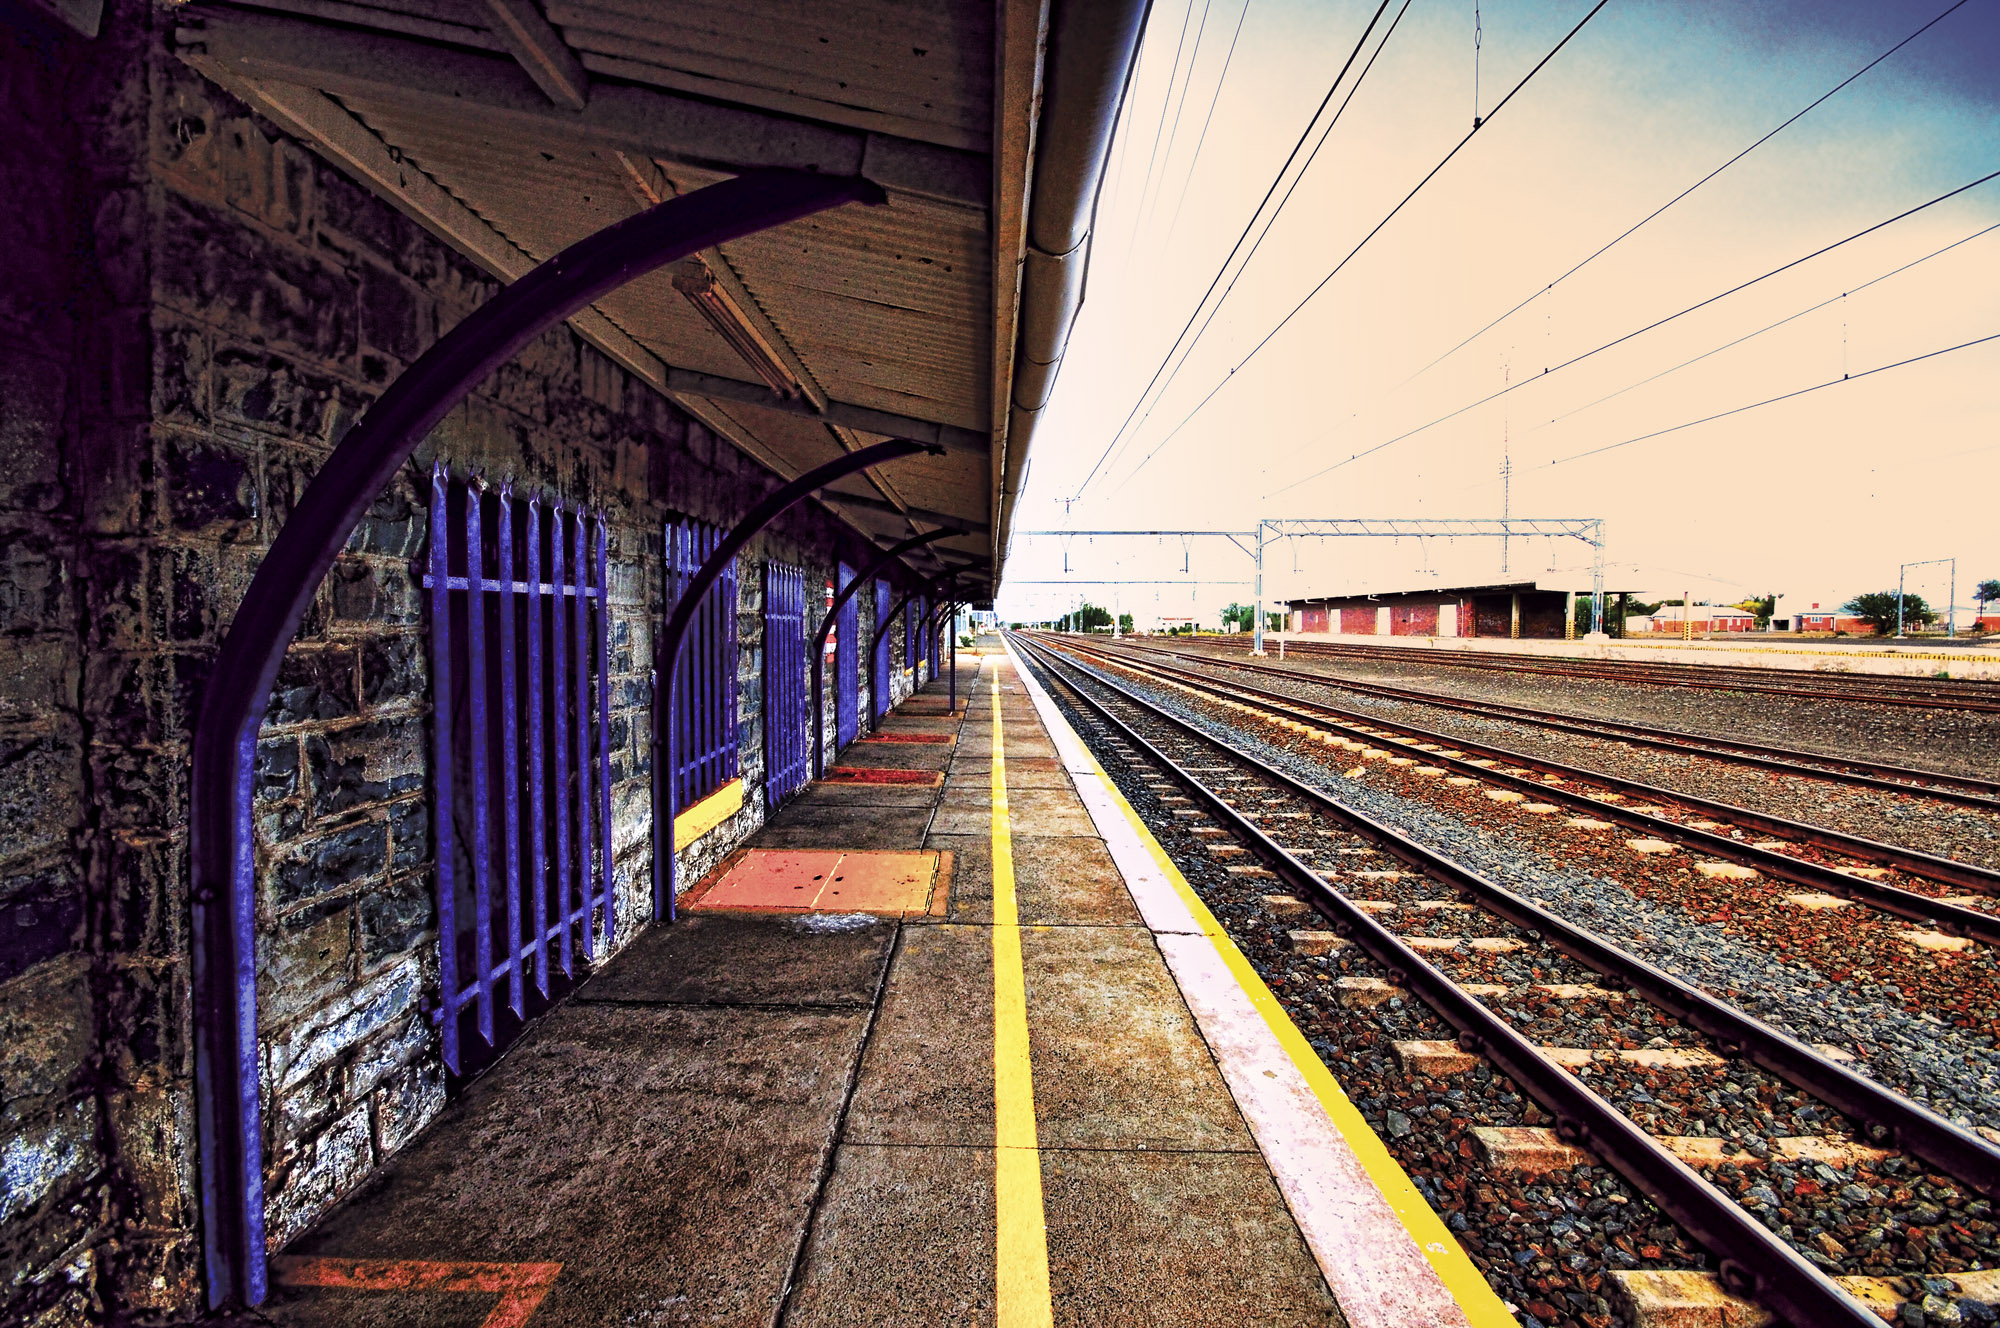 Karoo old stations